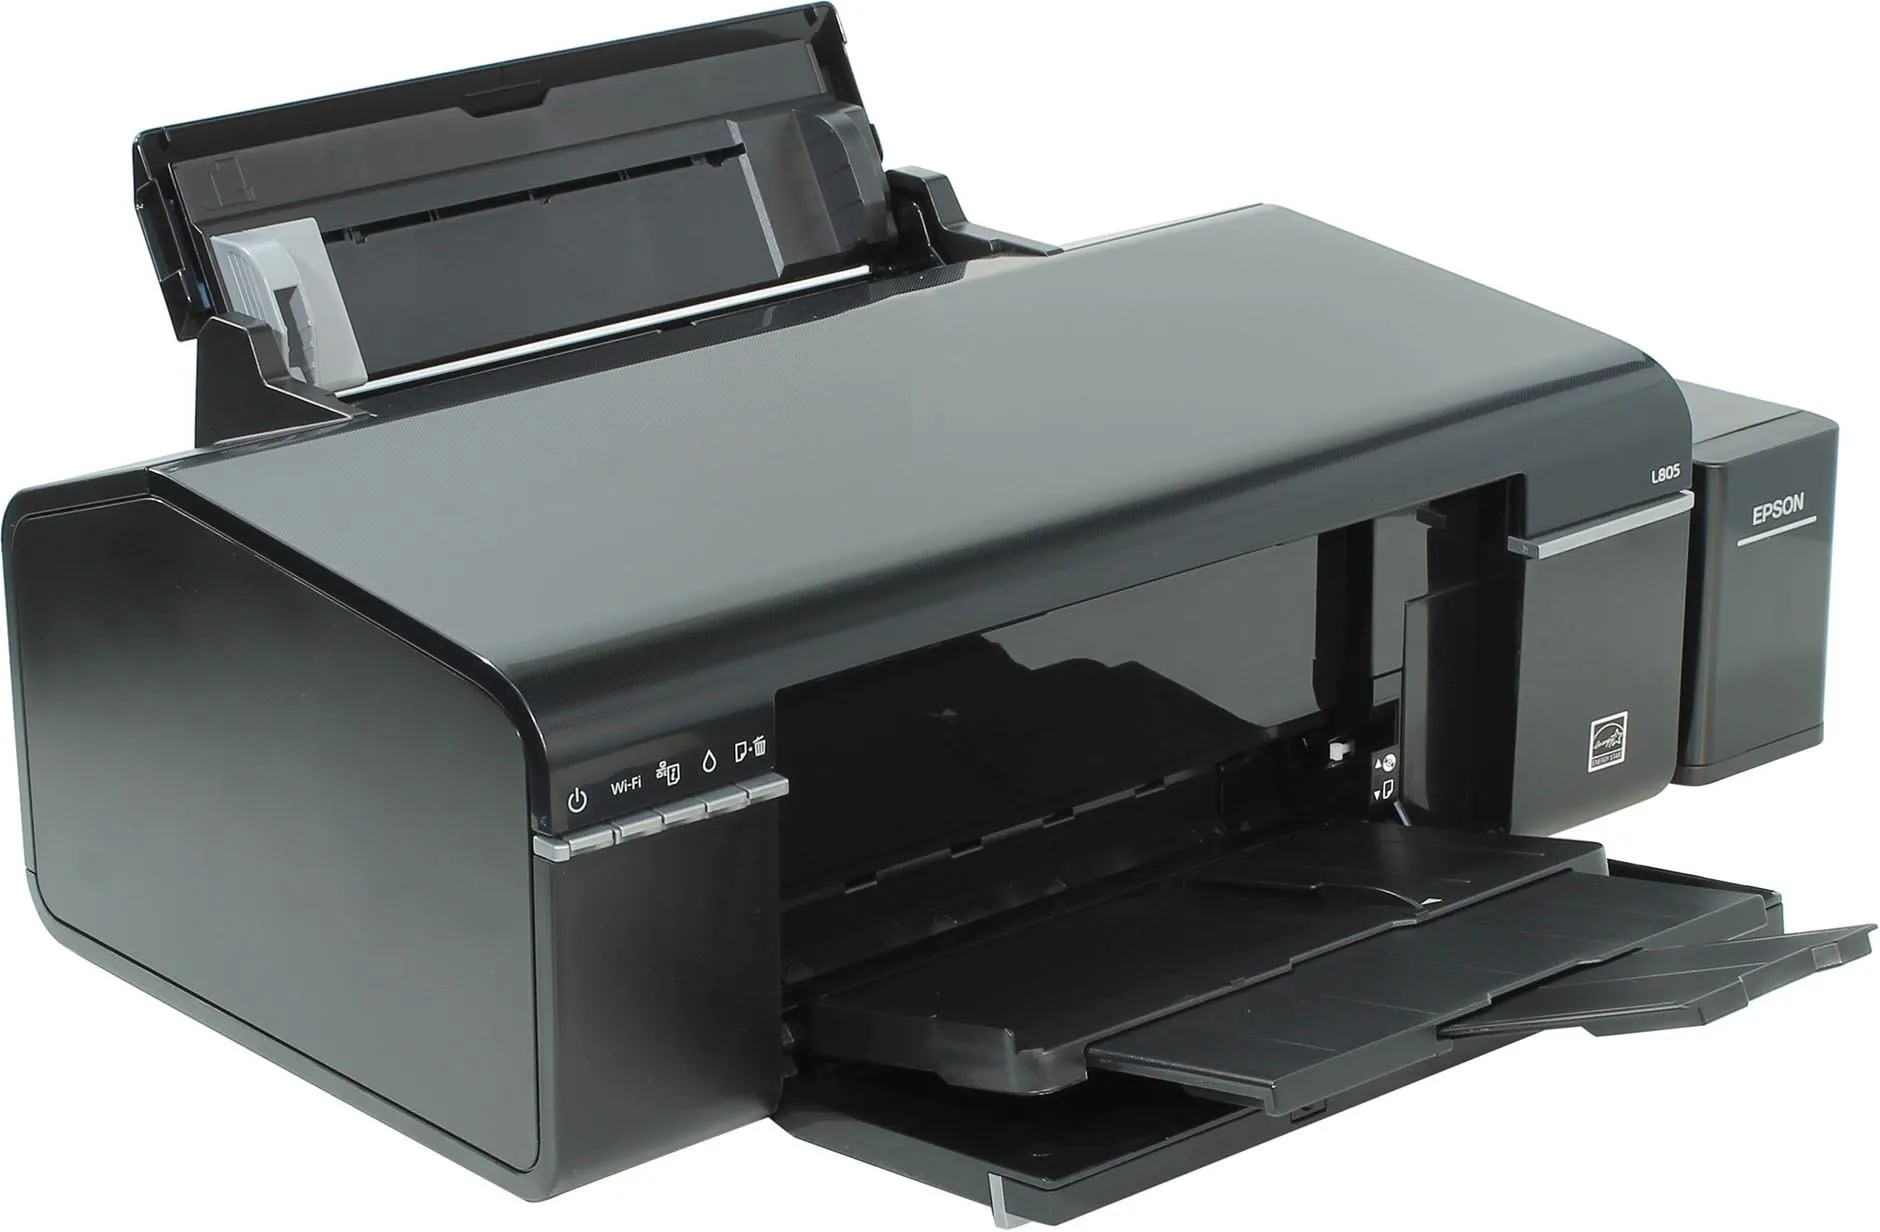 Принтер Epson L805 (A4, 37 стр / мин, 5760 optimized dpi, 6 красок, USB2.0, WiFi)#8